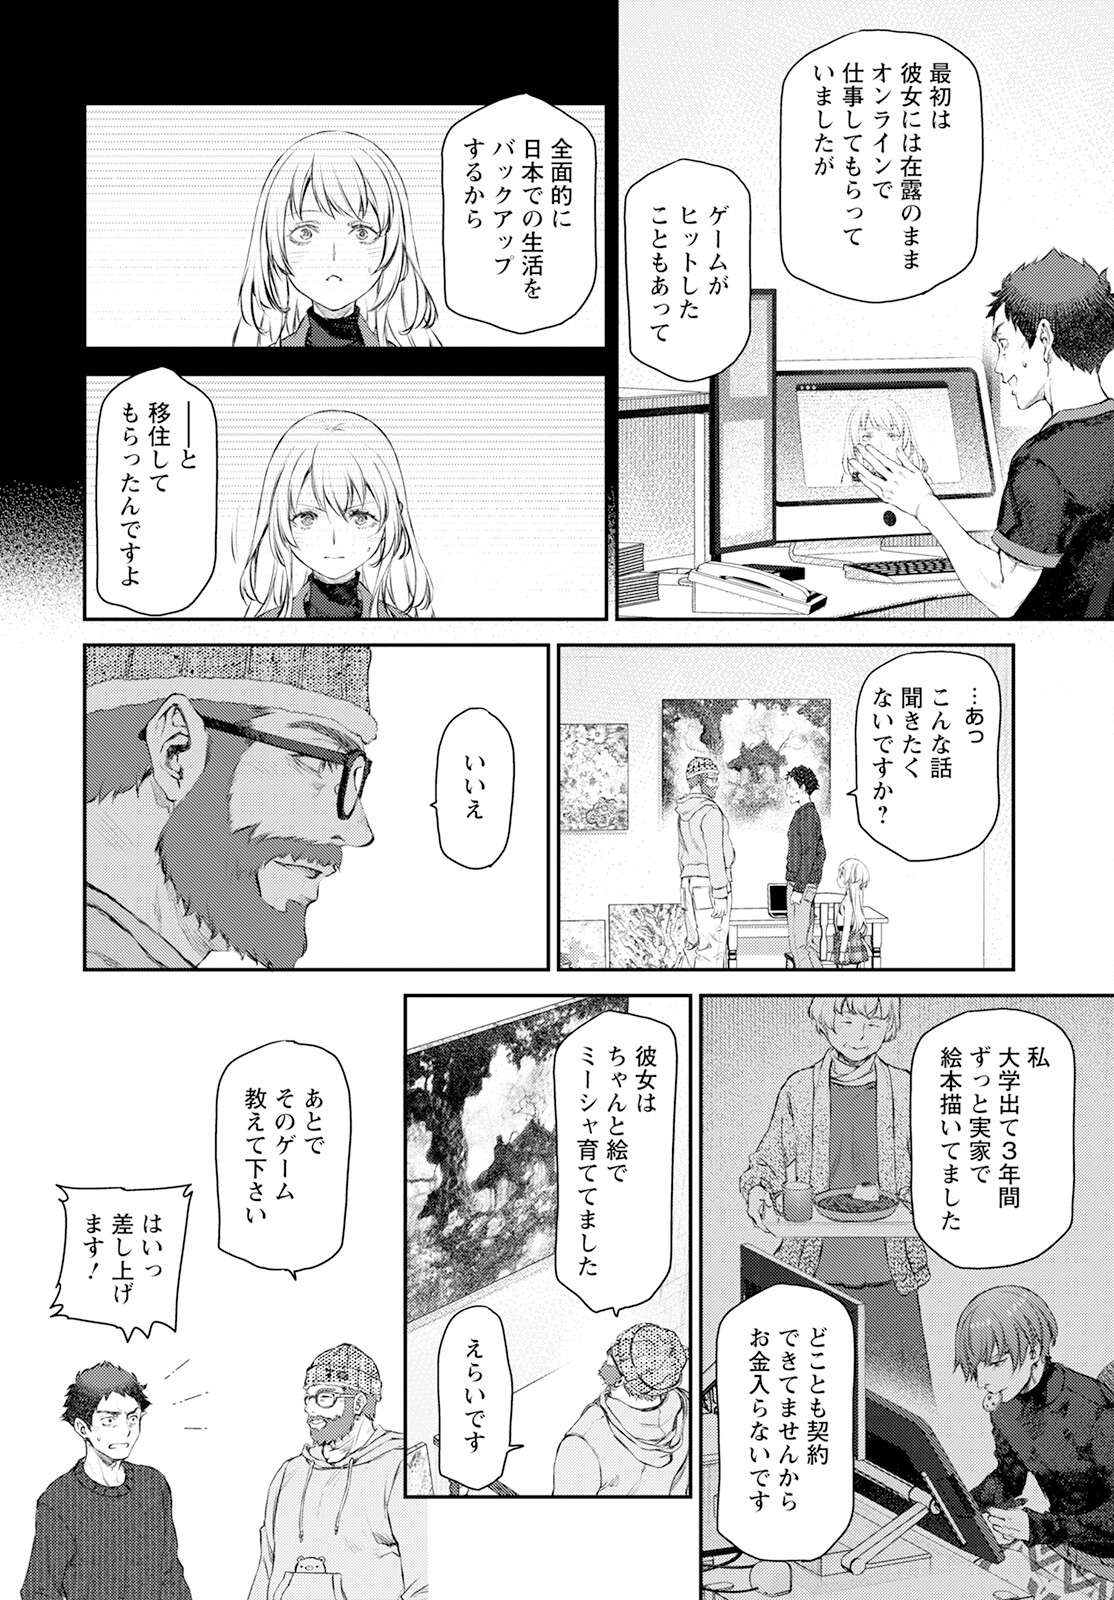 Uchi no Maid ga Uzasugiru! - Chapter 57 - Page 18